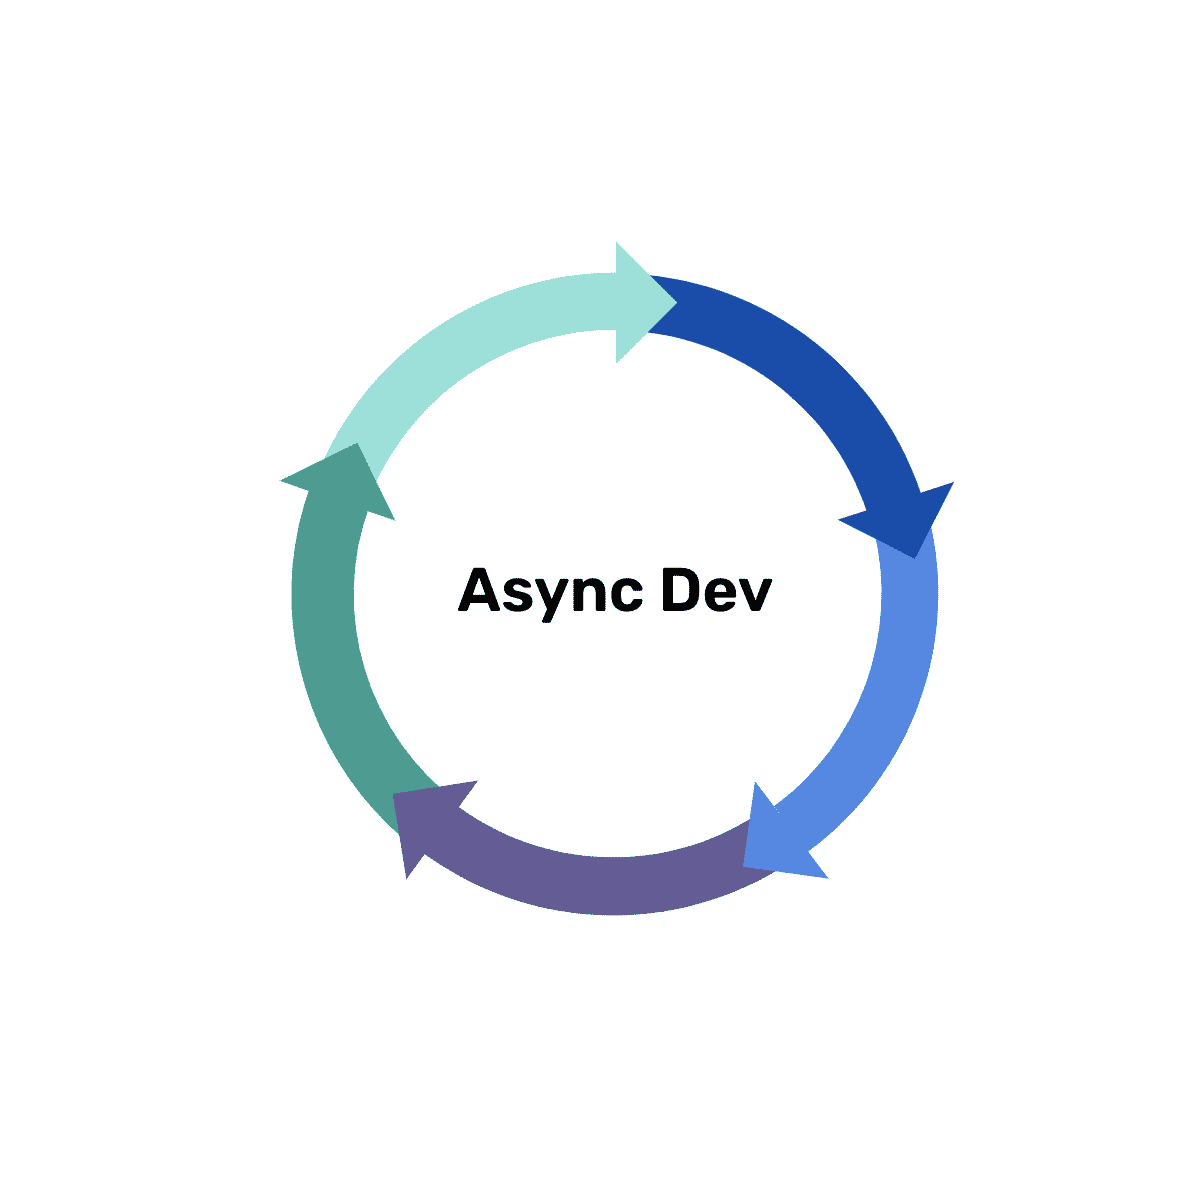 Asynchronous development for hybrid remote dev teams